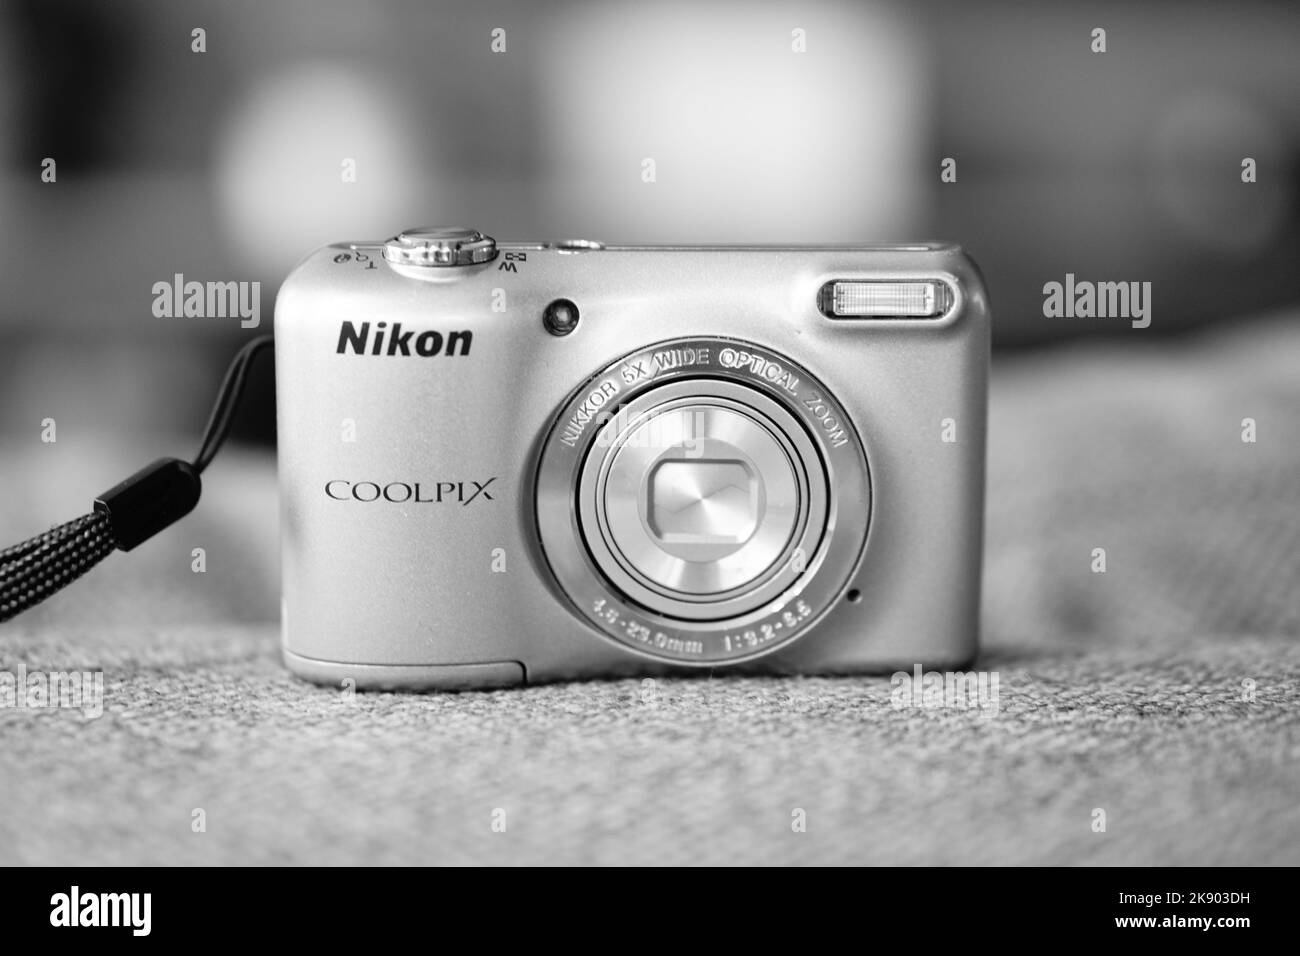 Nikon+digital+camera Black and White Stock Photos & Images - Alamy